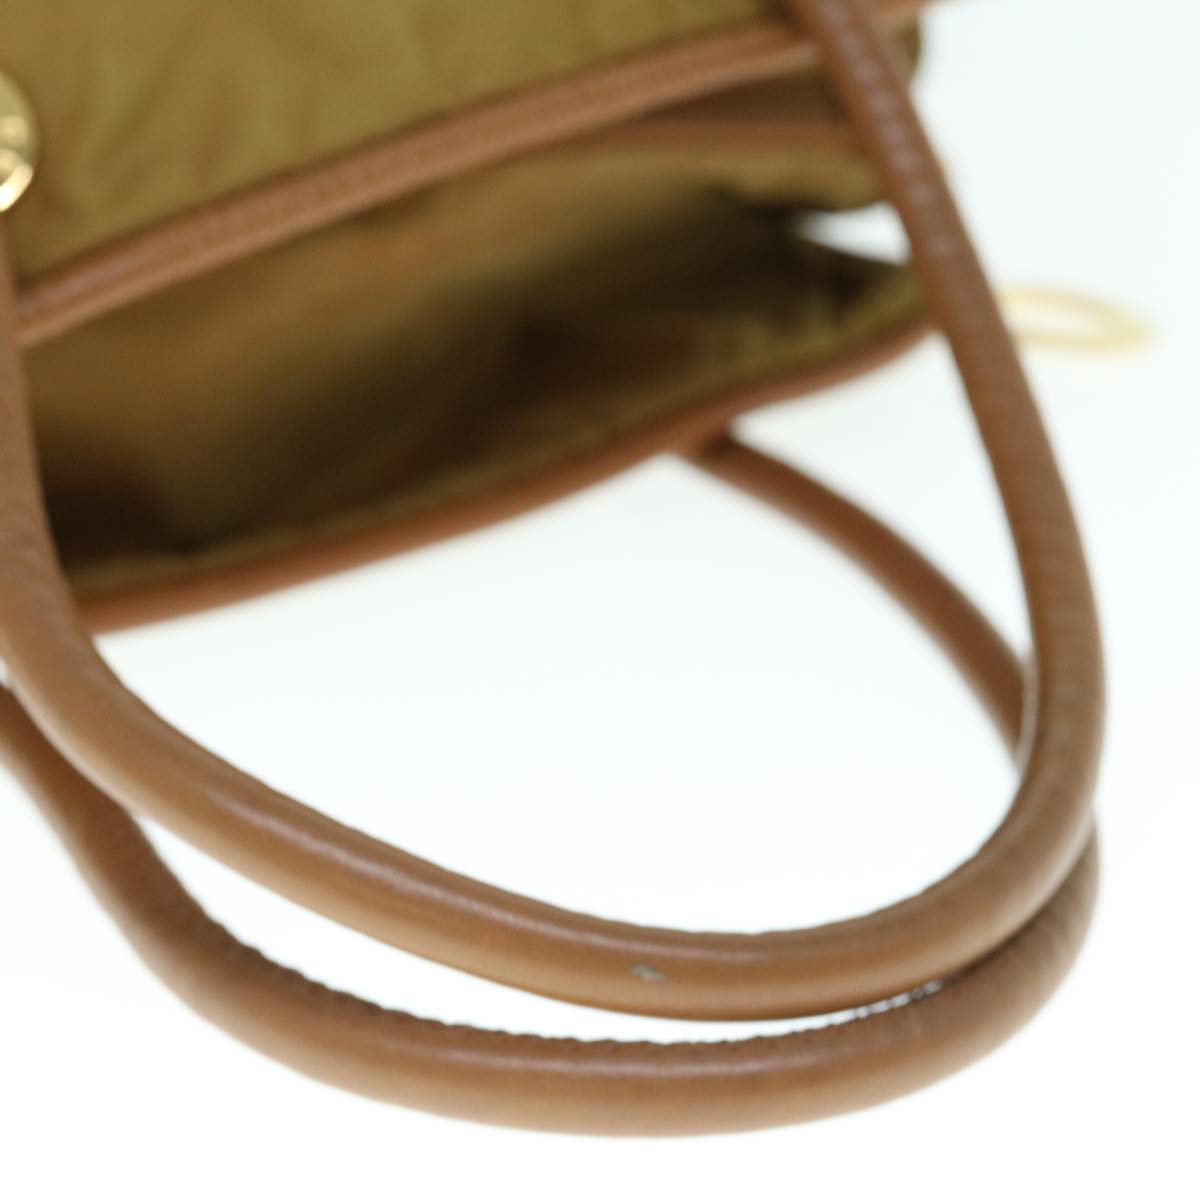 CELINE Hand Bag Nylon Khaki Auth 64274